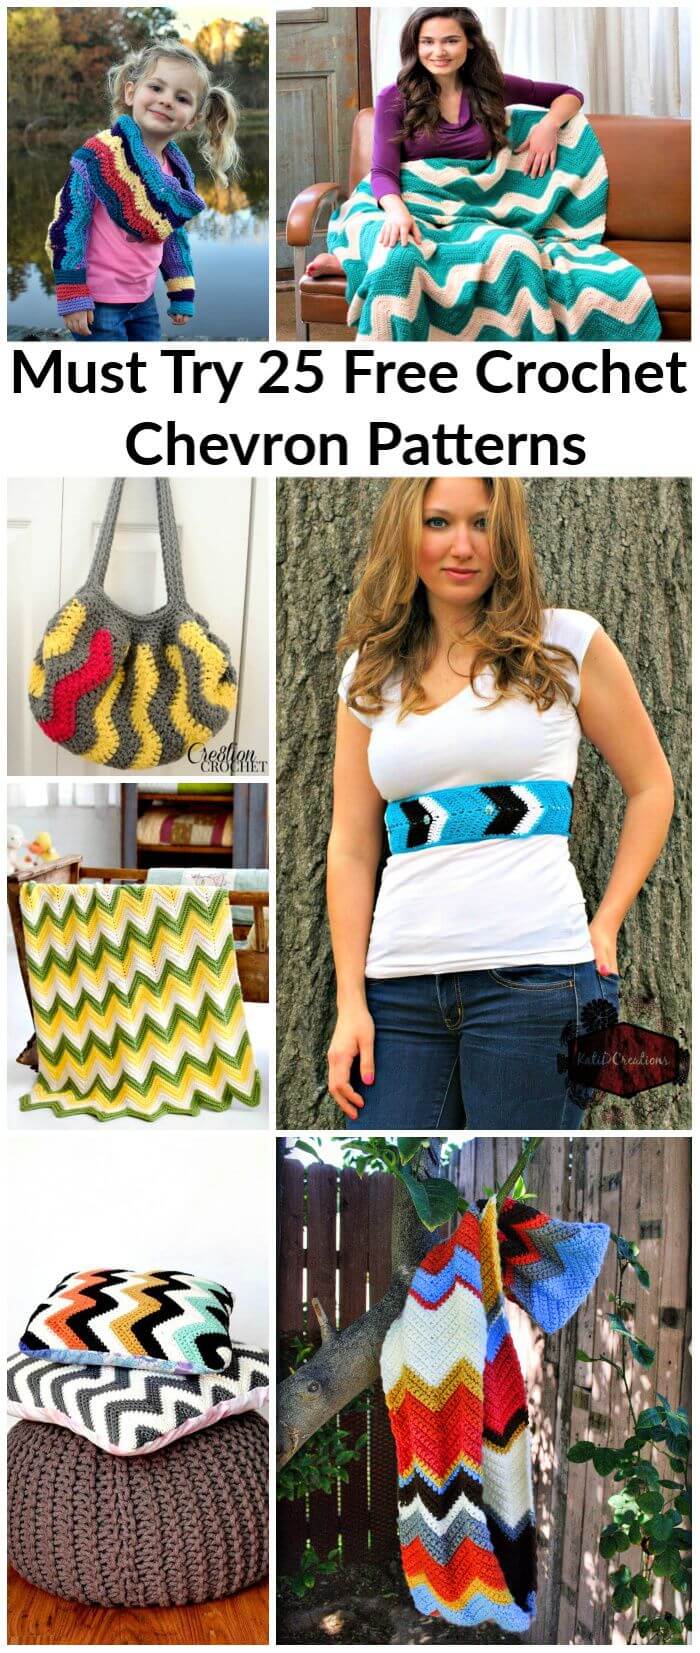 Crochet-Chevron-Patterns-Must-Try-25-Free-Crochet-Patterns-sharp-chevron-crochet-pattern-Easy-Craft-Ideas-DIY-Crafts